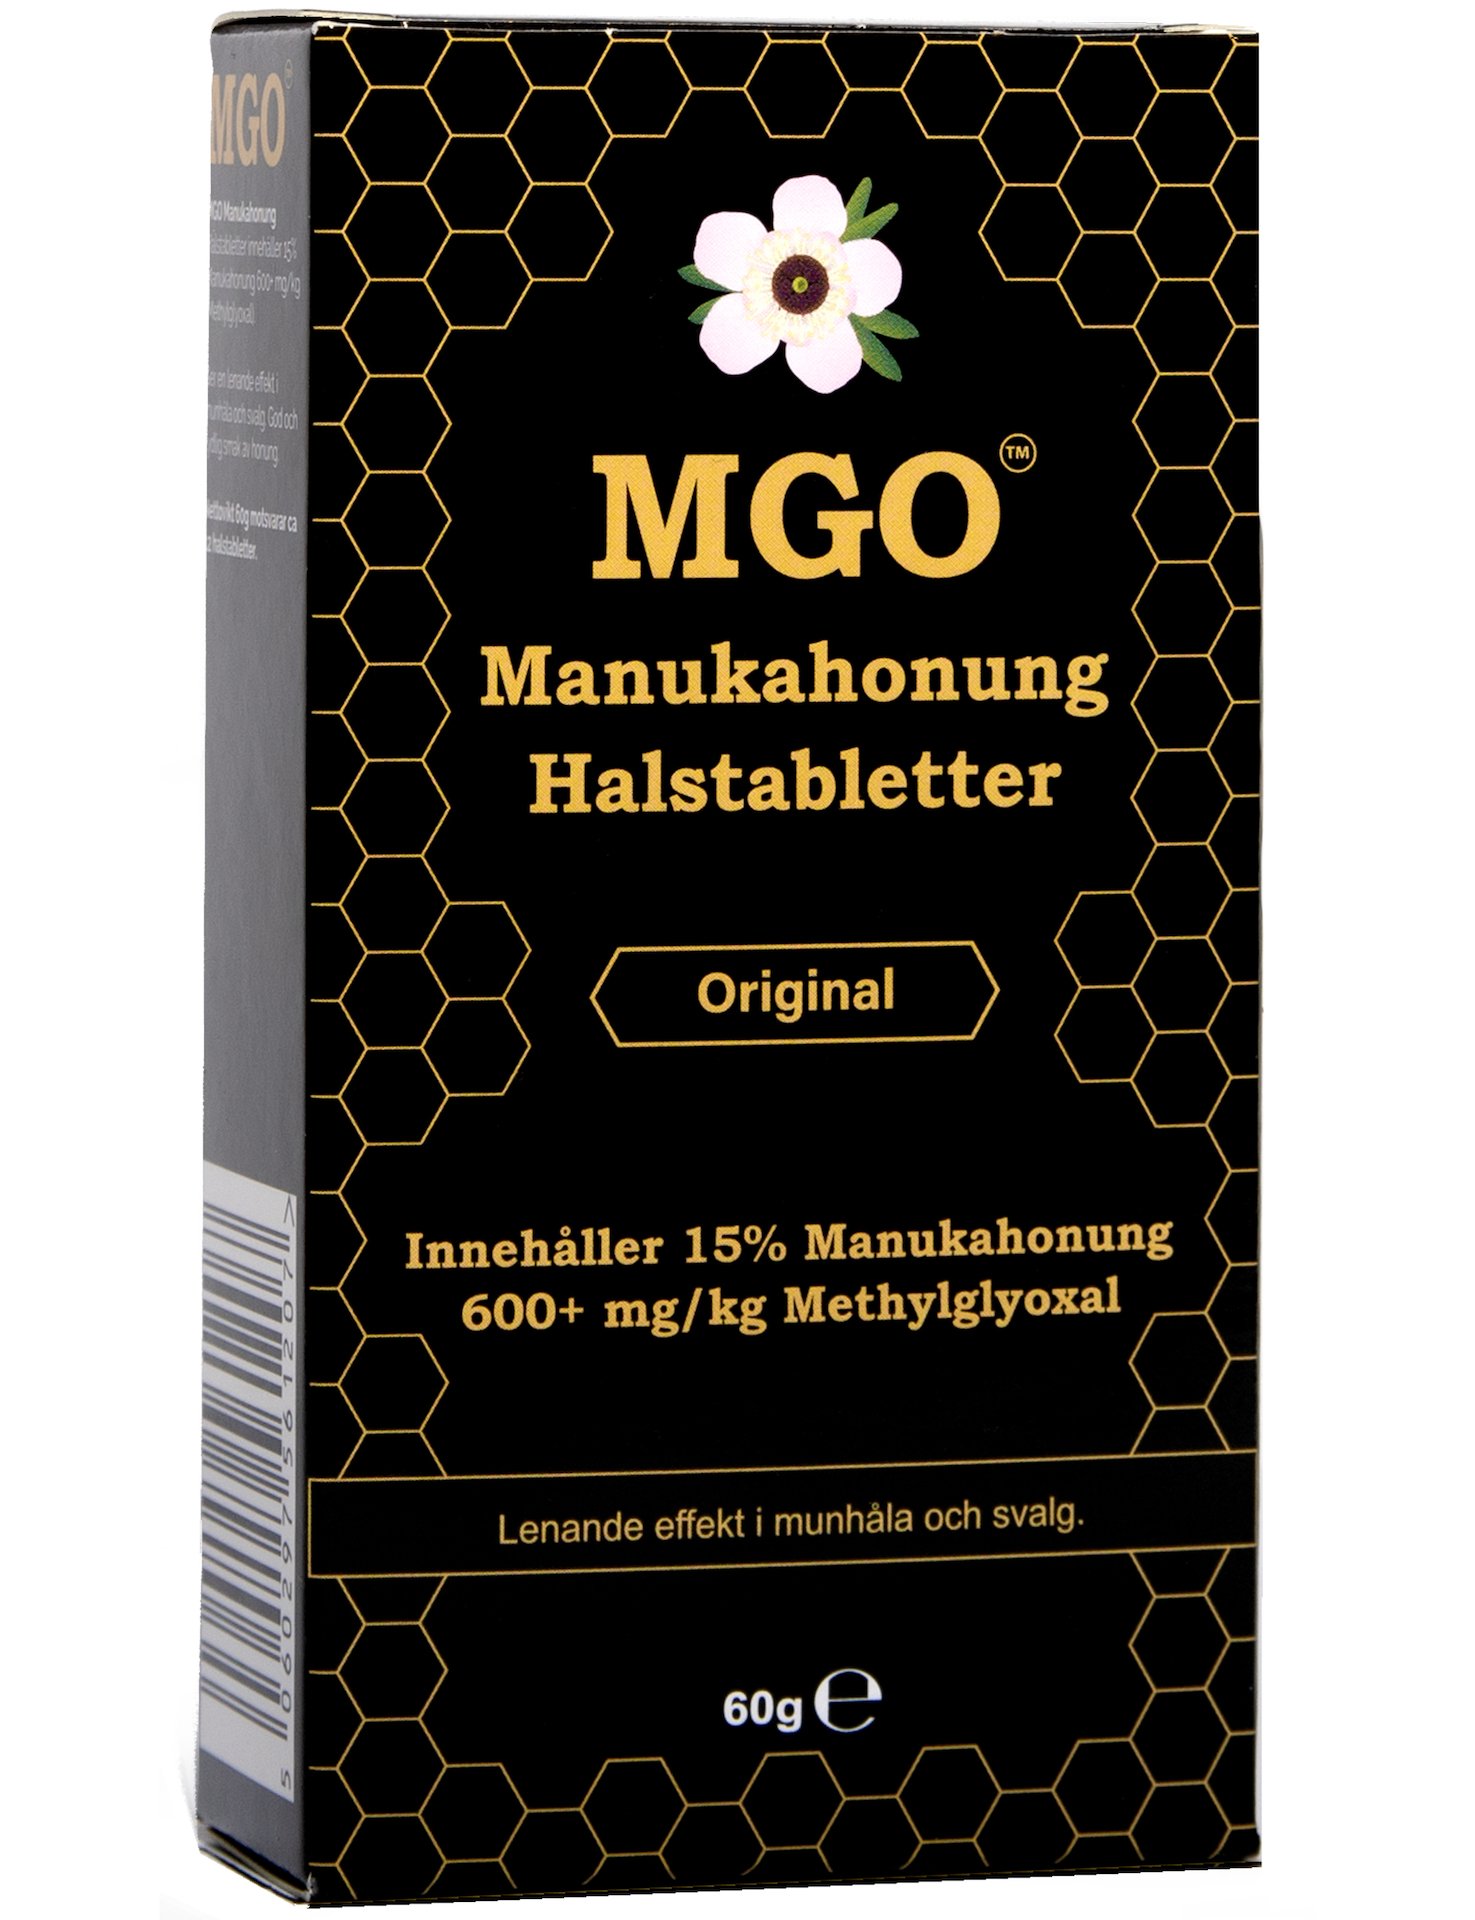 MGO Manukahonung Halstabletter Original 600+ 60g